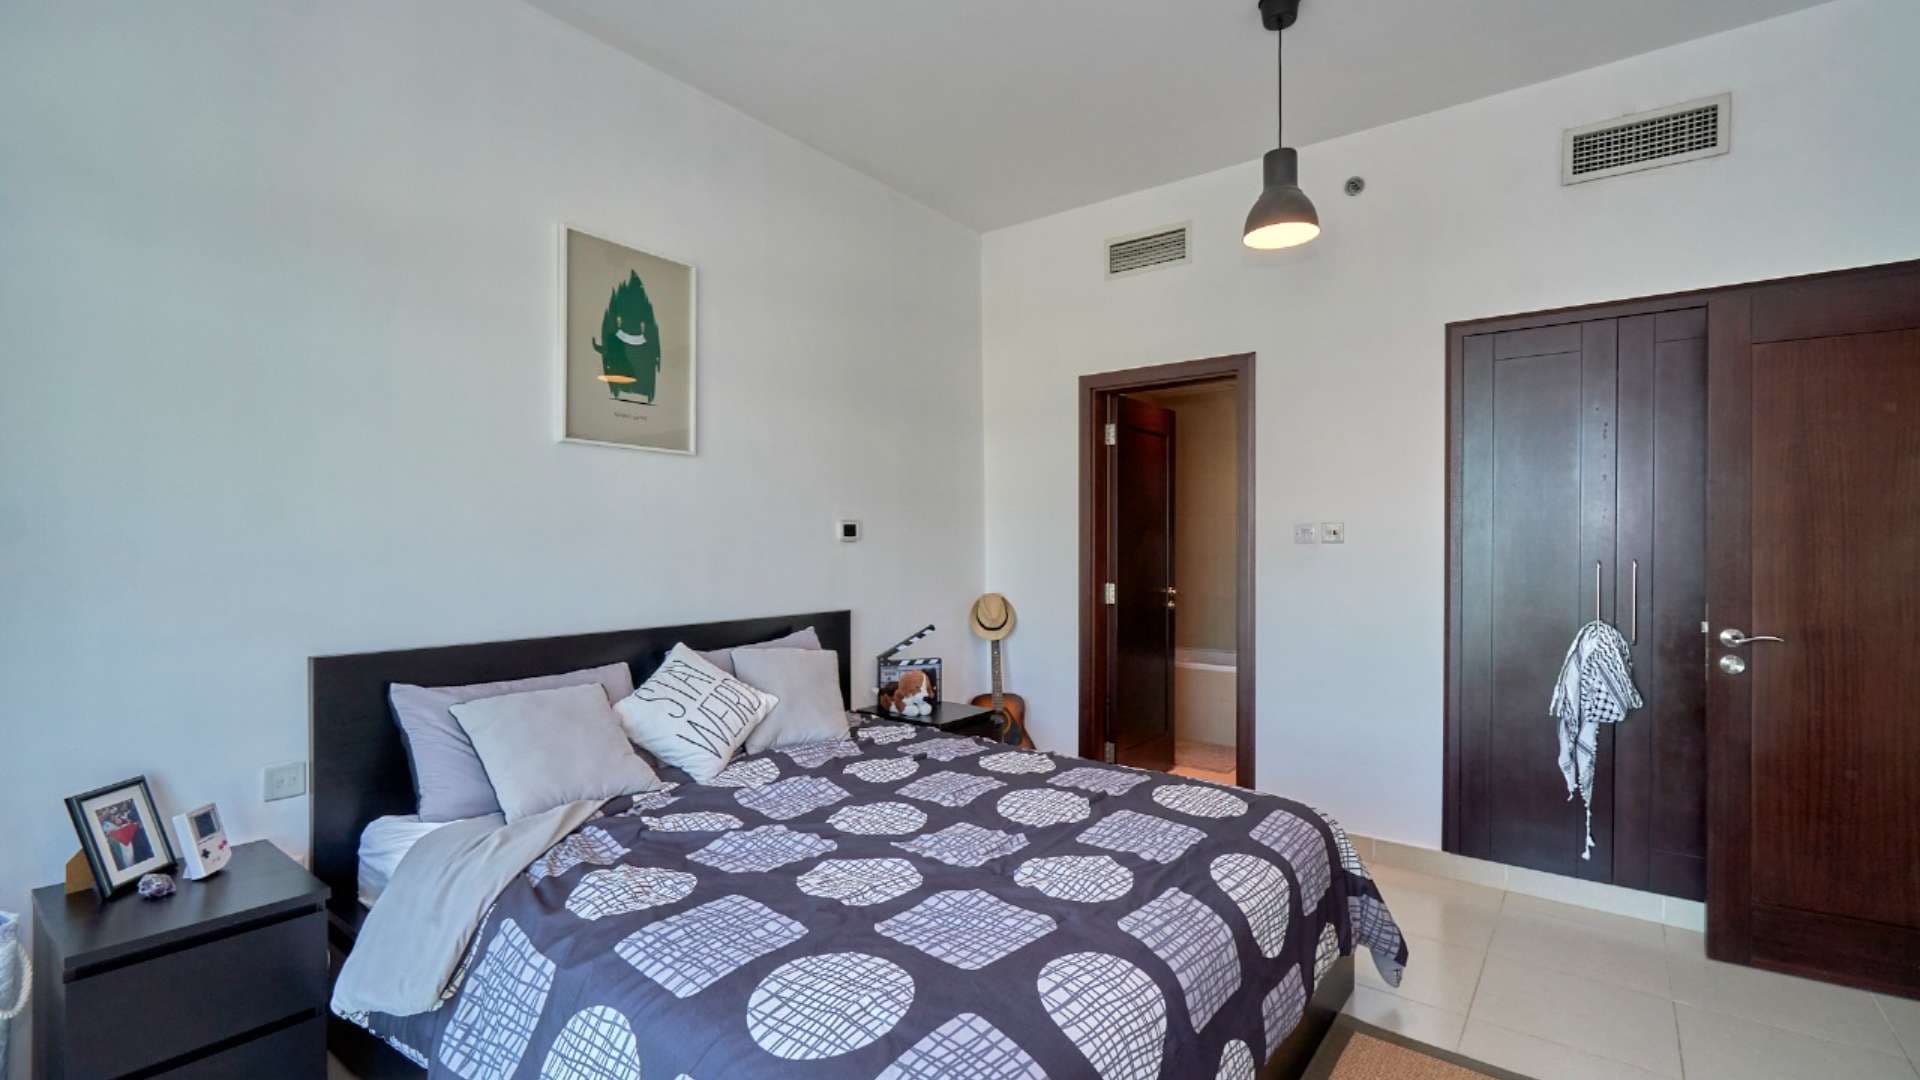 1 Bedroom Apartment For Sale Mosela Lp09556 264606e56b237800.jpeg